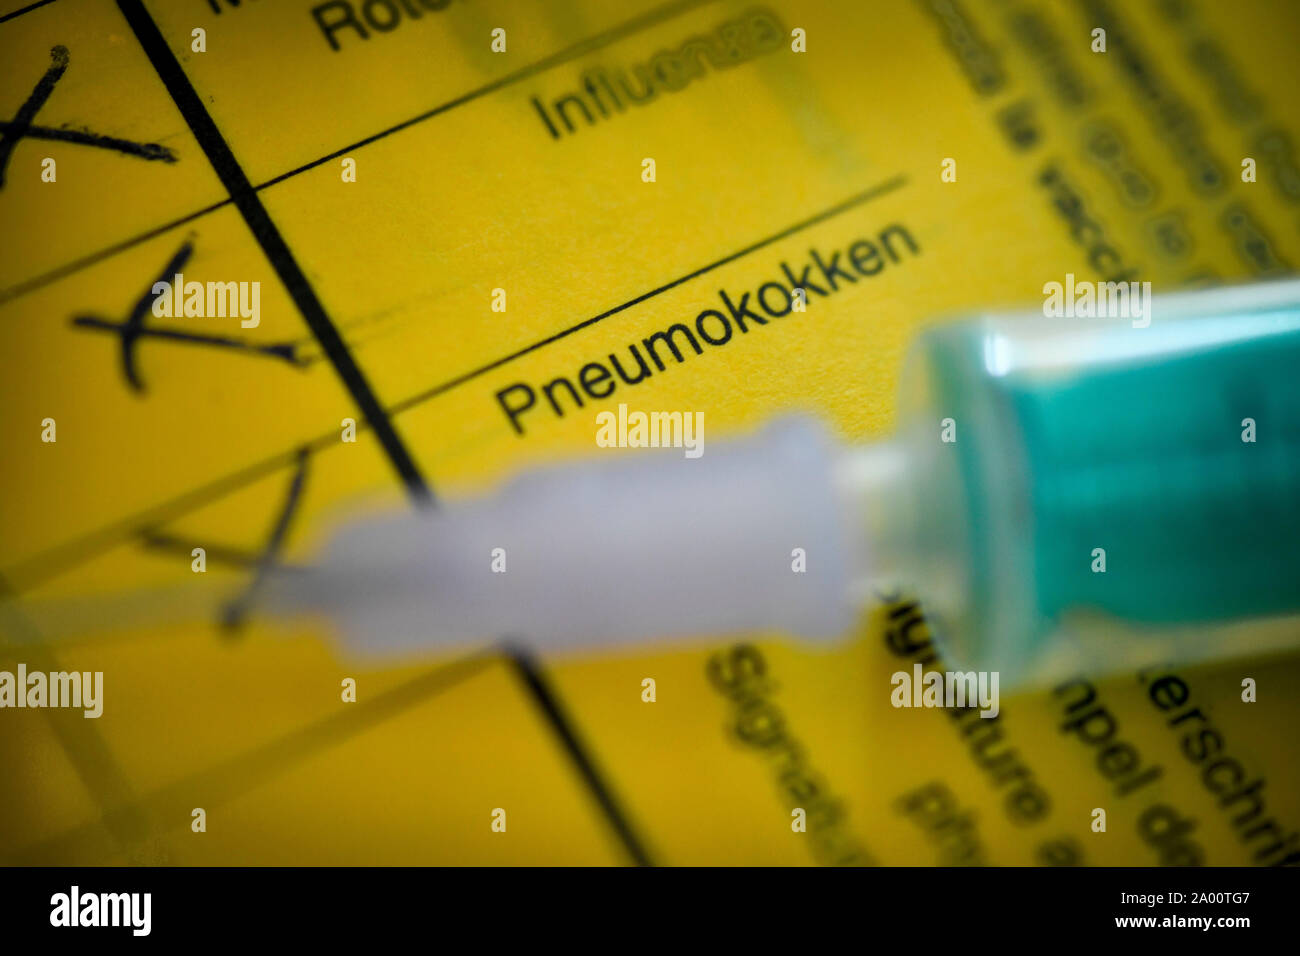 Pneumokokken, Impfbuch, Symbolfoto Impfung Stock Photo